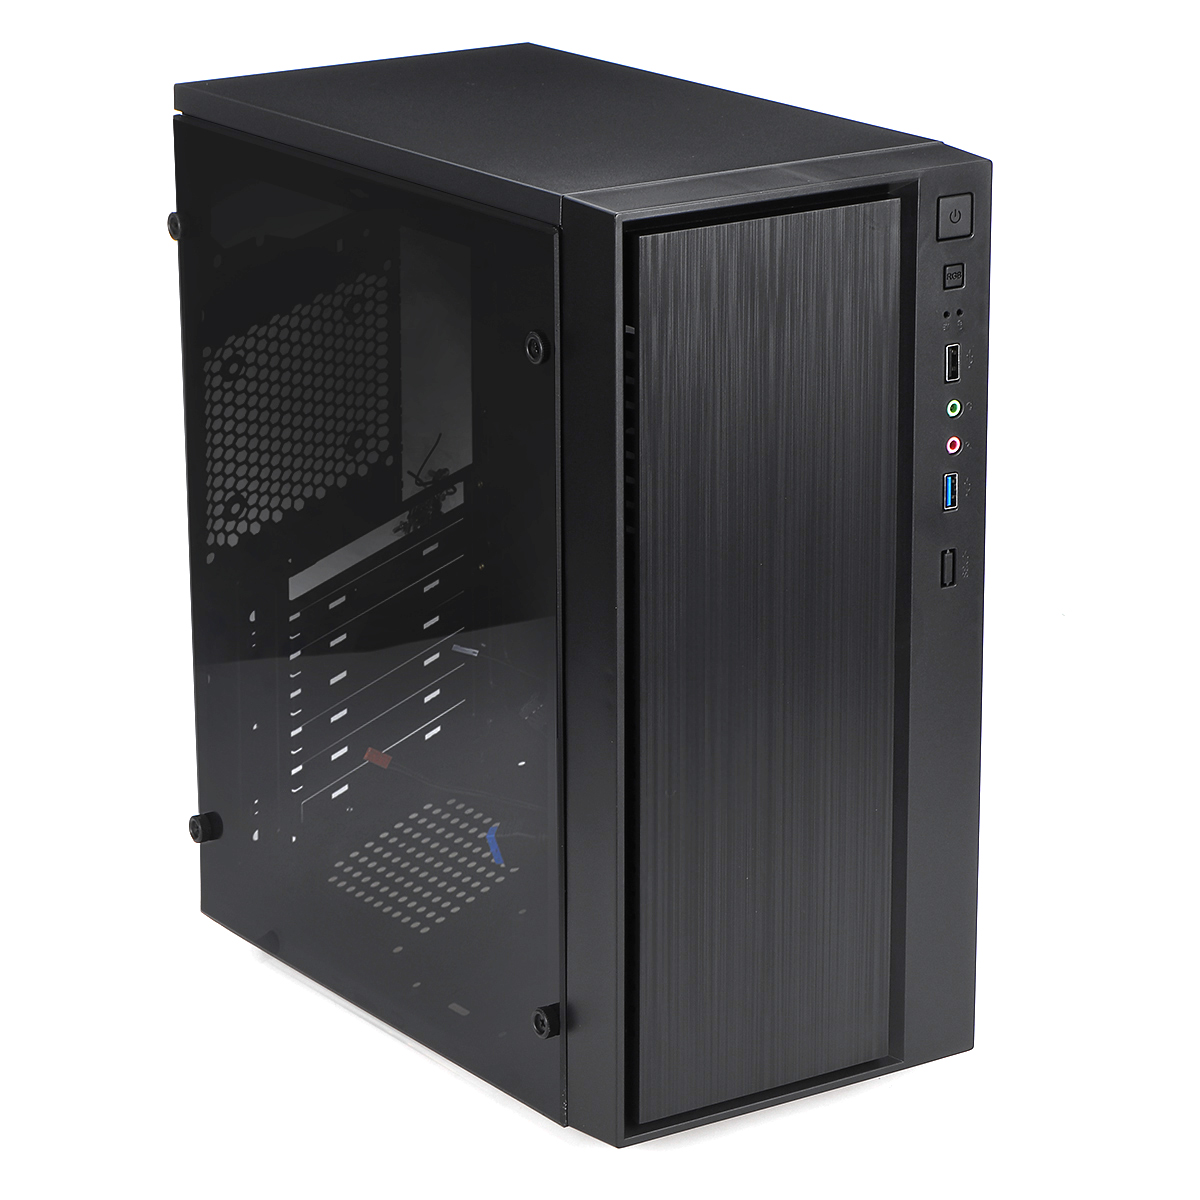 M-ATX--Mini-ITX-Computer-Gaming-PC-Case-RGB-Cooling-Fan-USB-Audio-Interface-with-Light-Bar-1627169-1